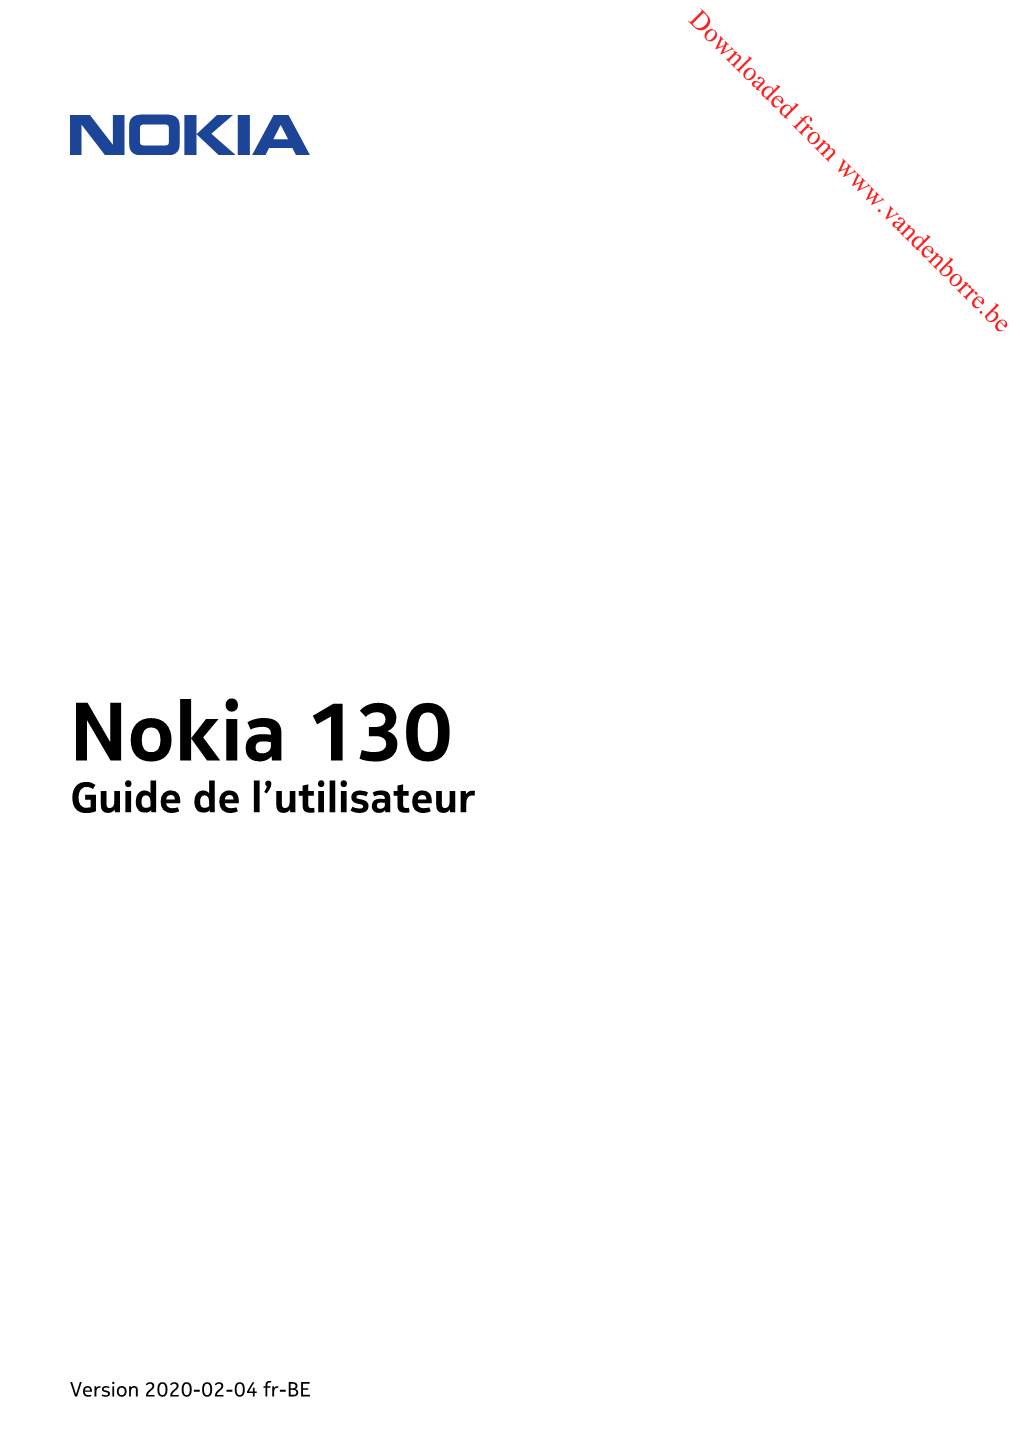 Nokia 130 Guide De L'utilisateur Pdfdisplaydoctitle=True Pdflang=Fr-BE